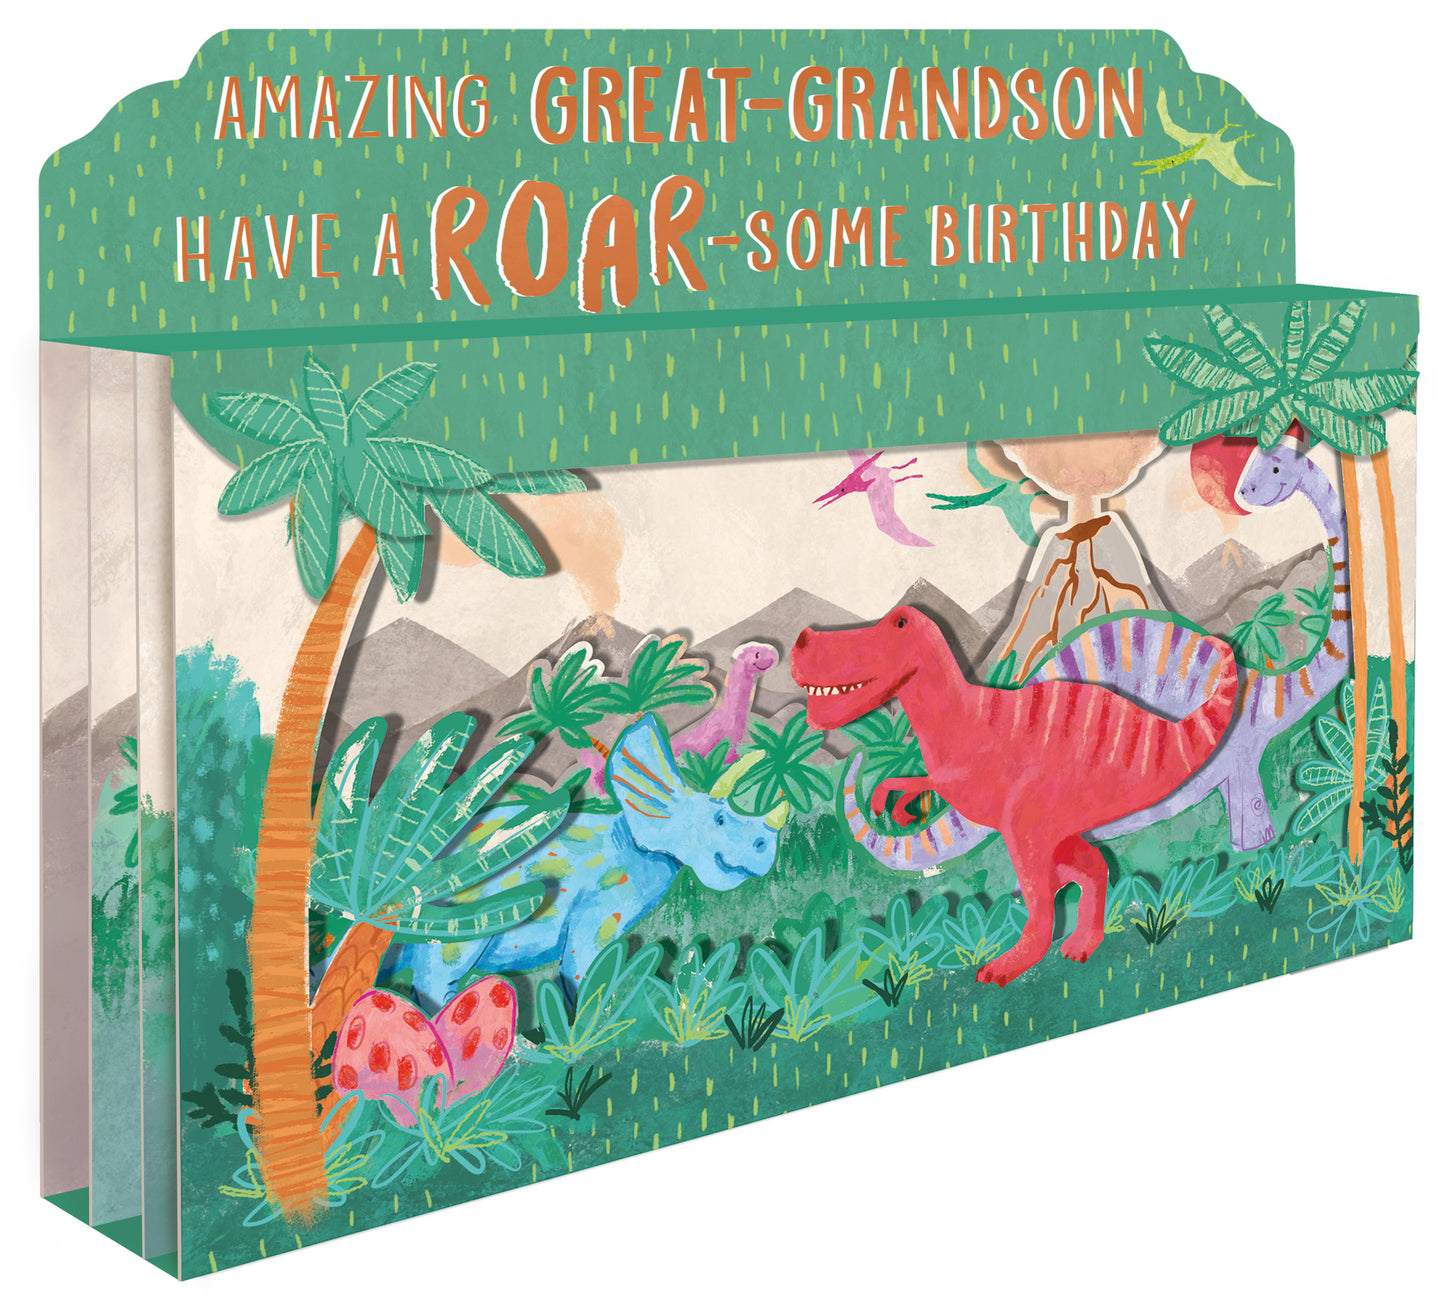 Spectacular 3D Roar-Some Dinosaur Great-Grandson Birthday Card